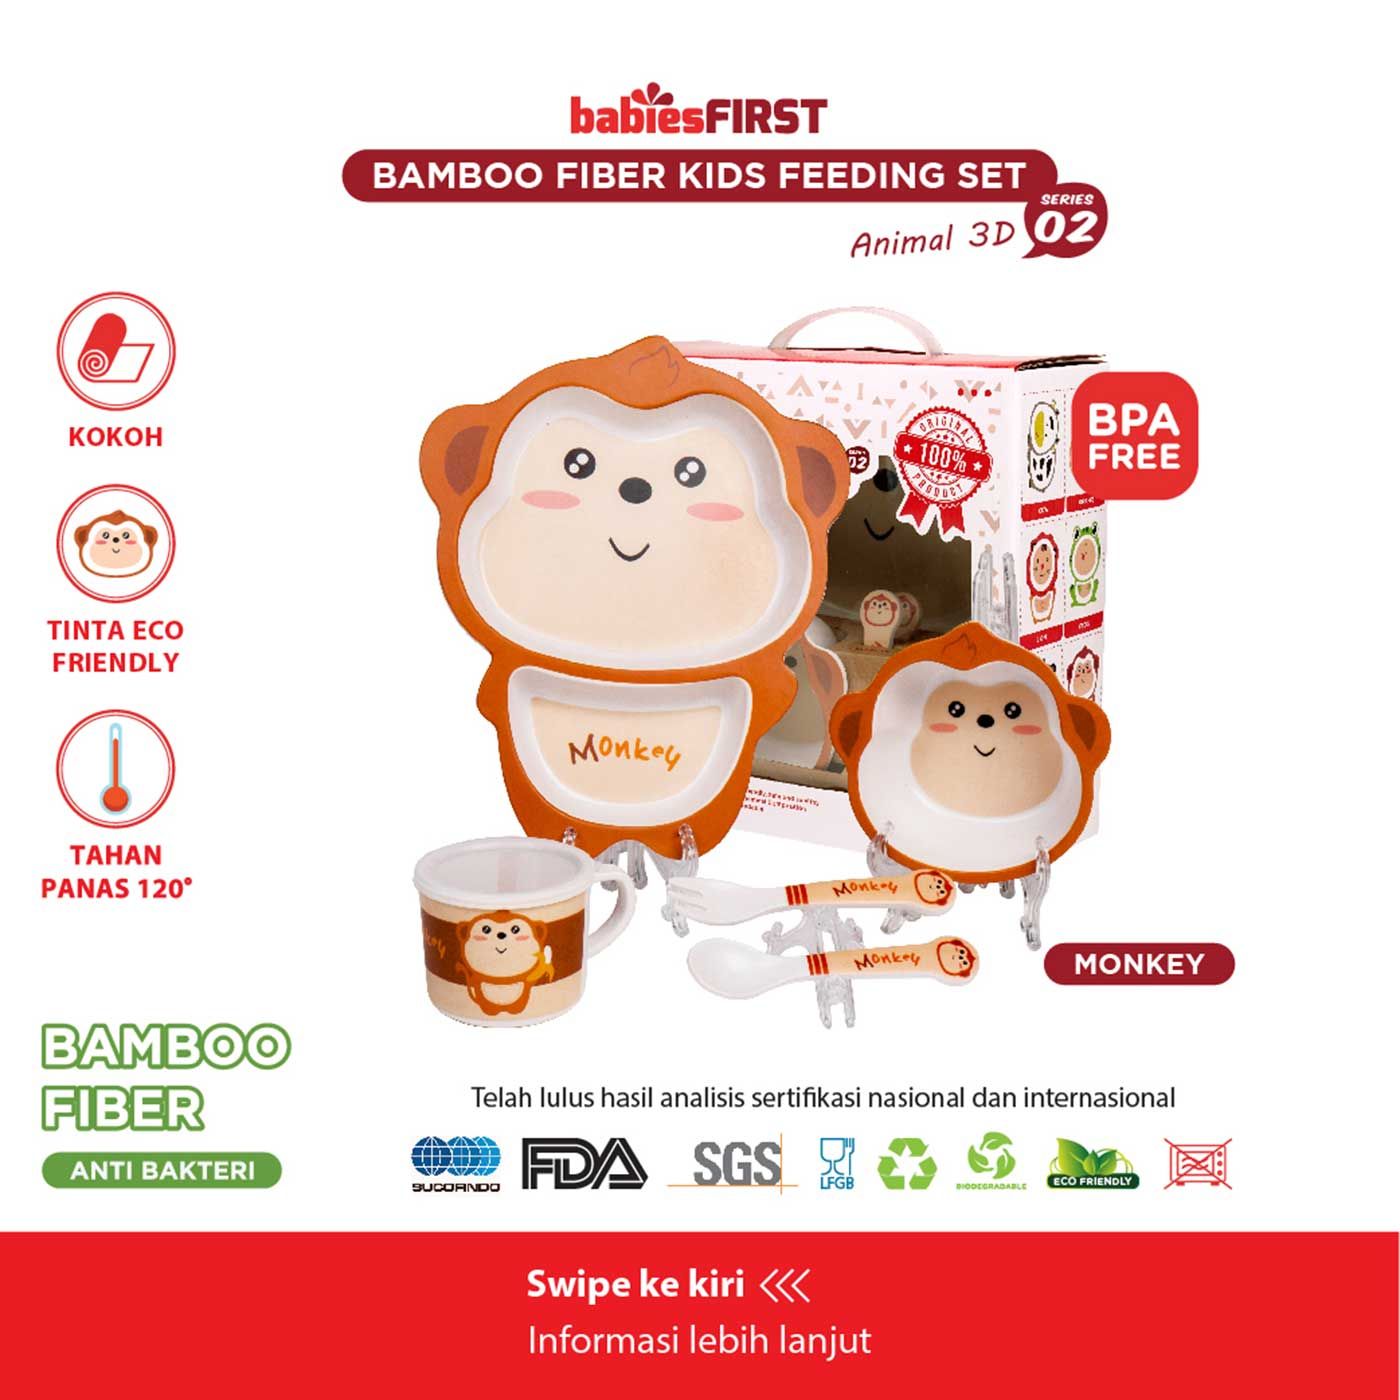 Babiesfirst Bamboo Fiber Kids Feeding Set Animal 3D Monkey - 1